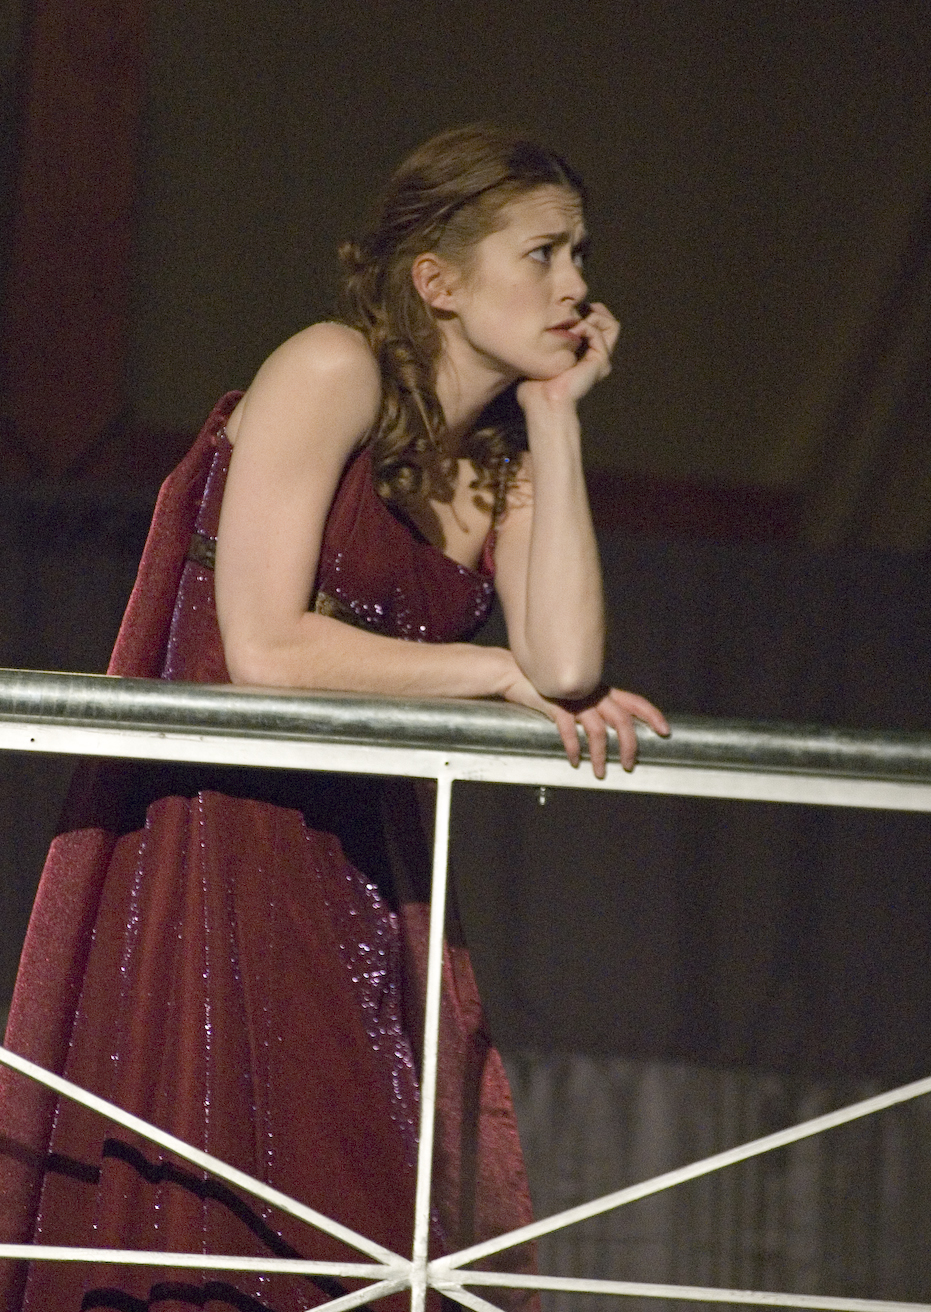 Juliet in "Romeo & Juliet"